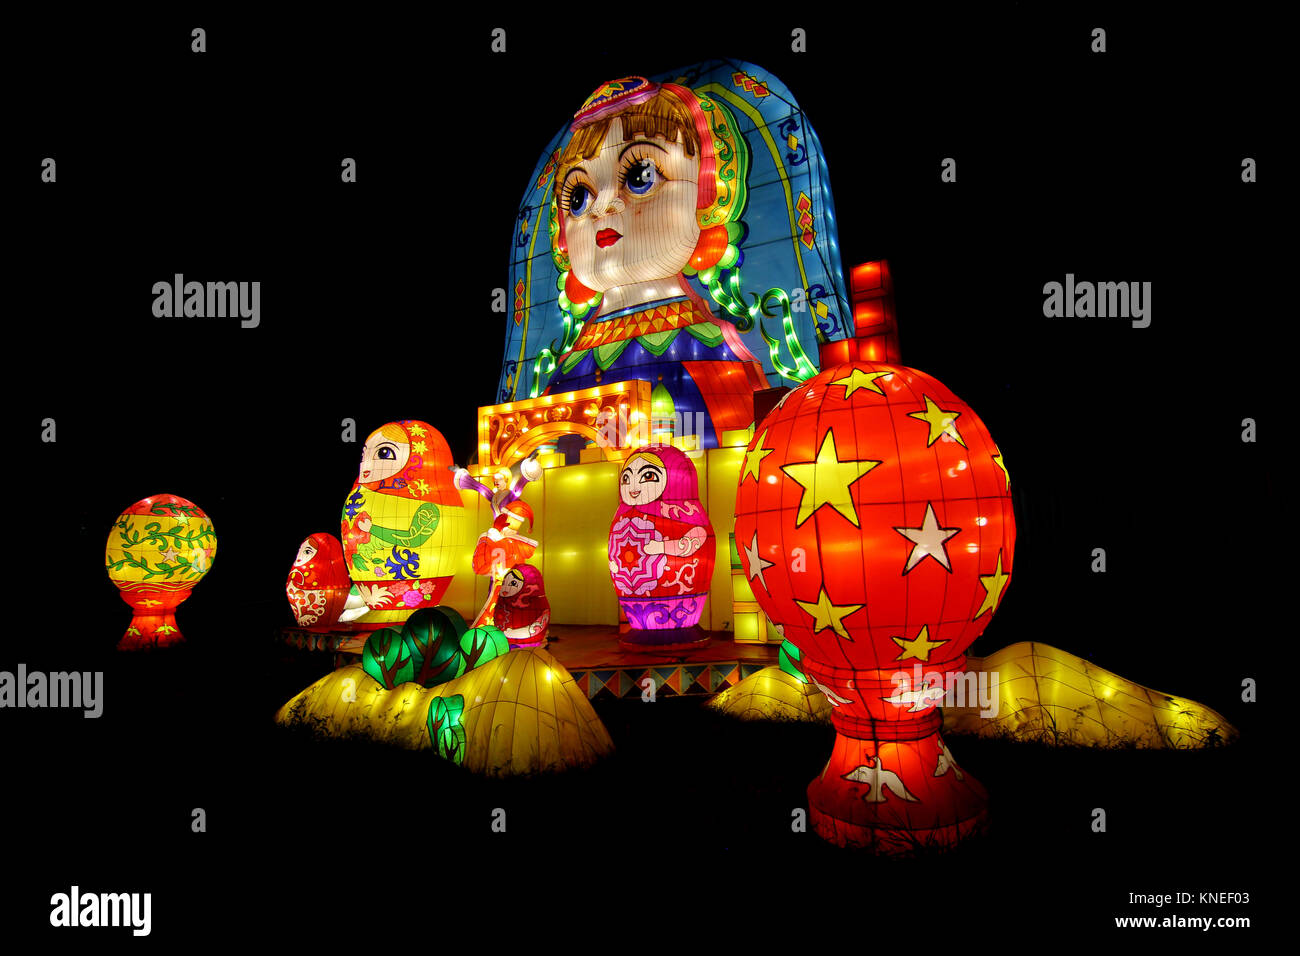 Russian doll lanterns illuminated at Chinese Lantern Festival Stock Photo